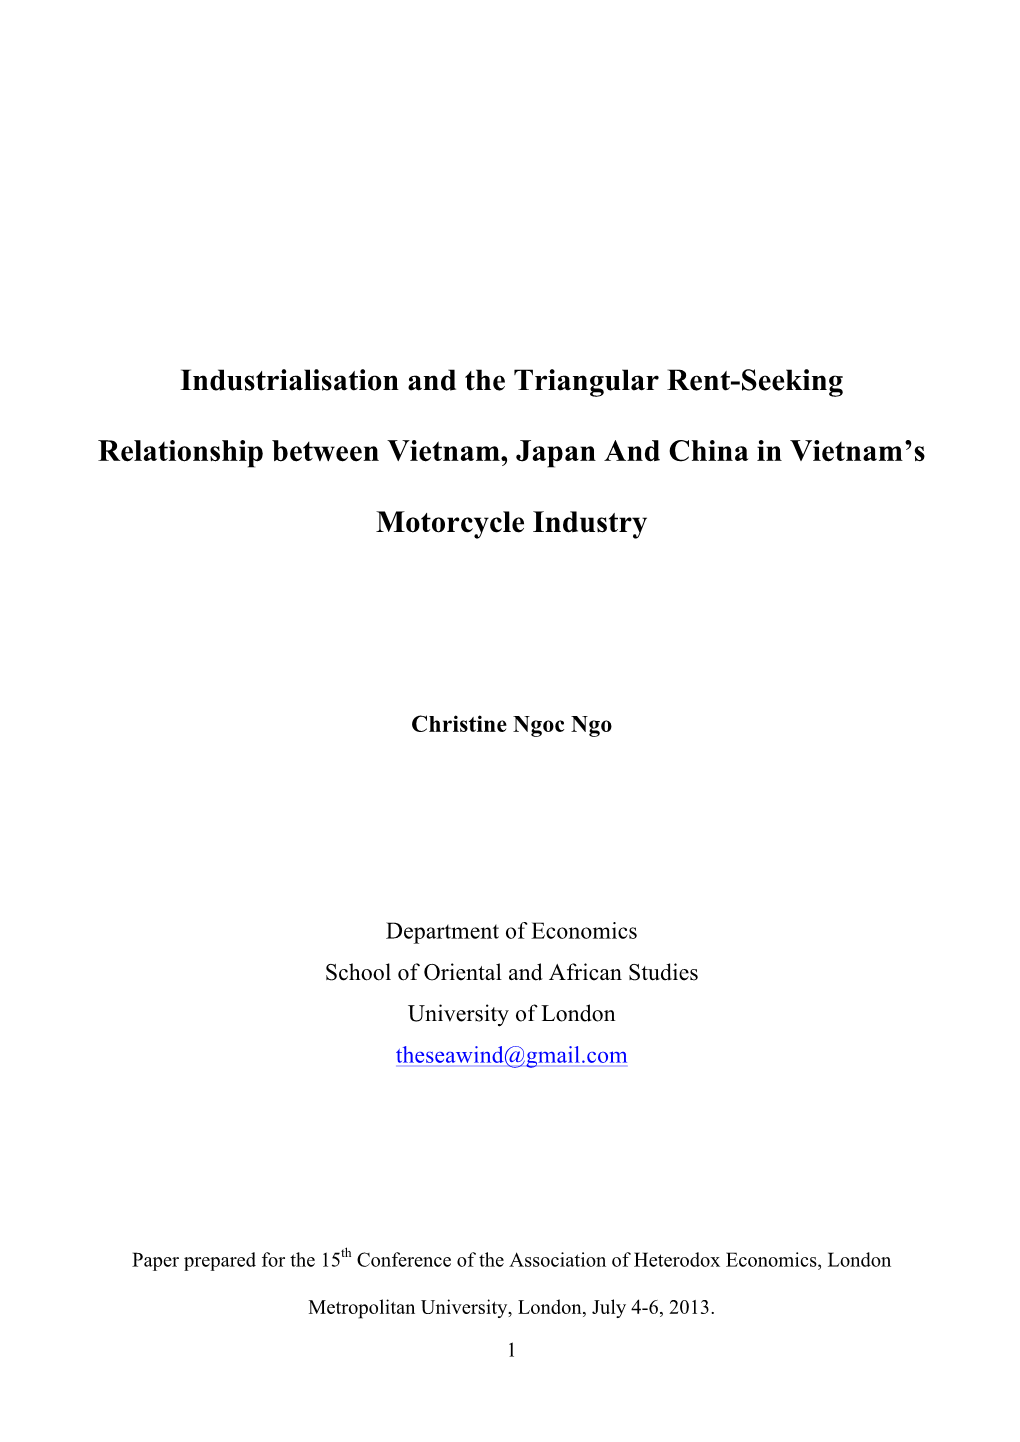 AHE Paper (Motorcycle Industry)